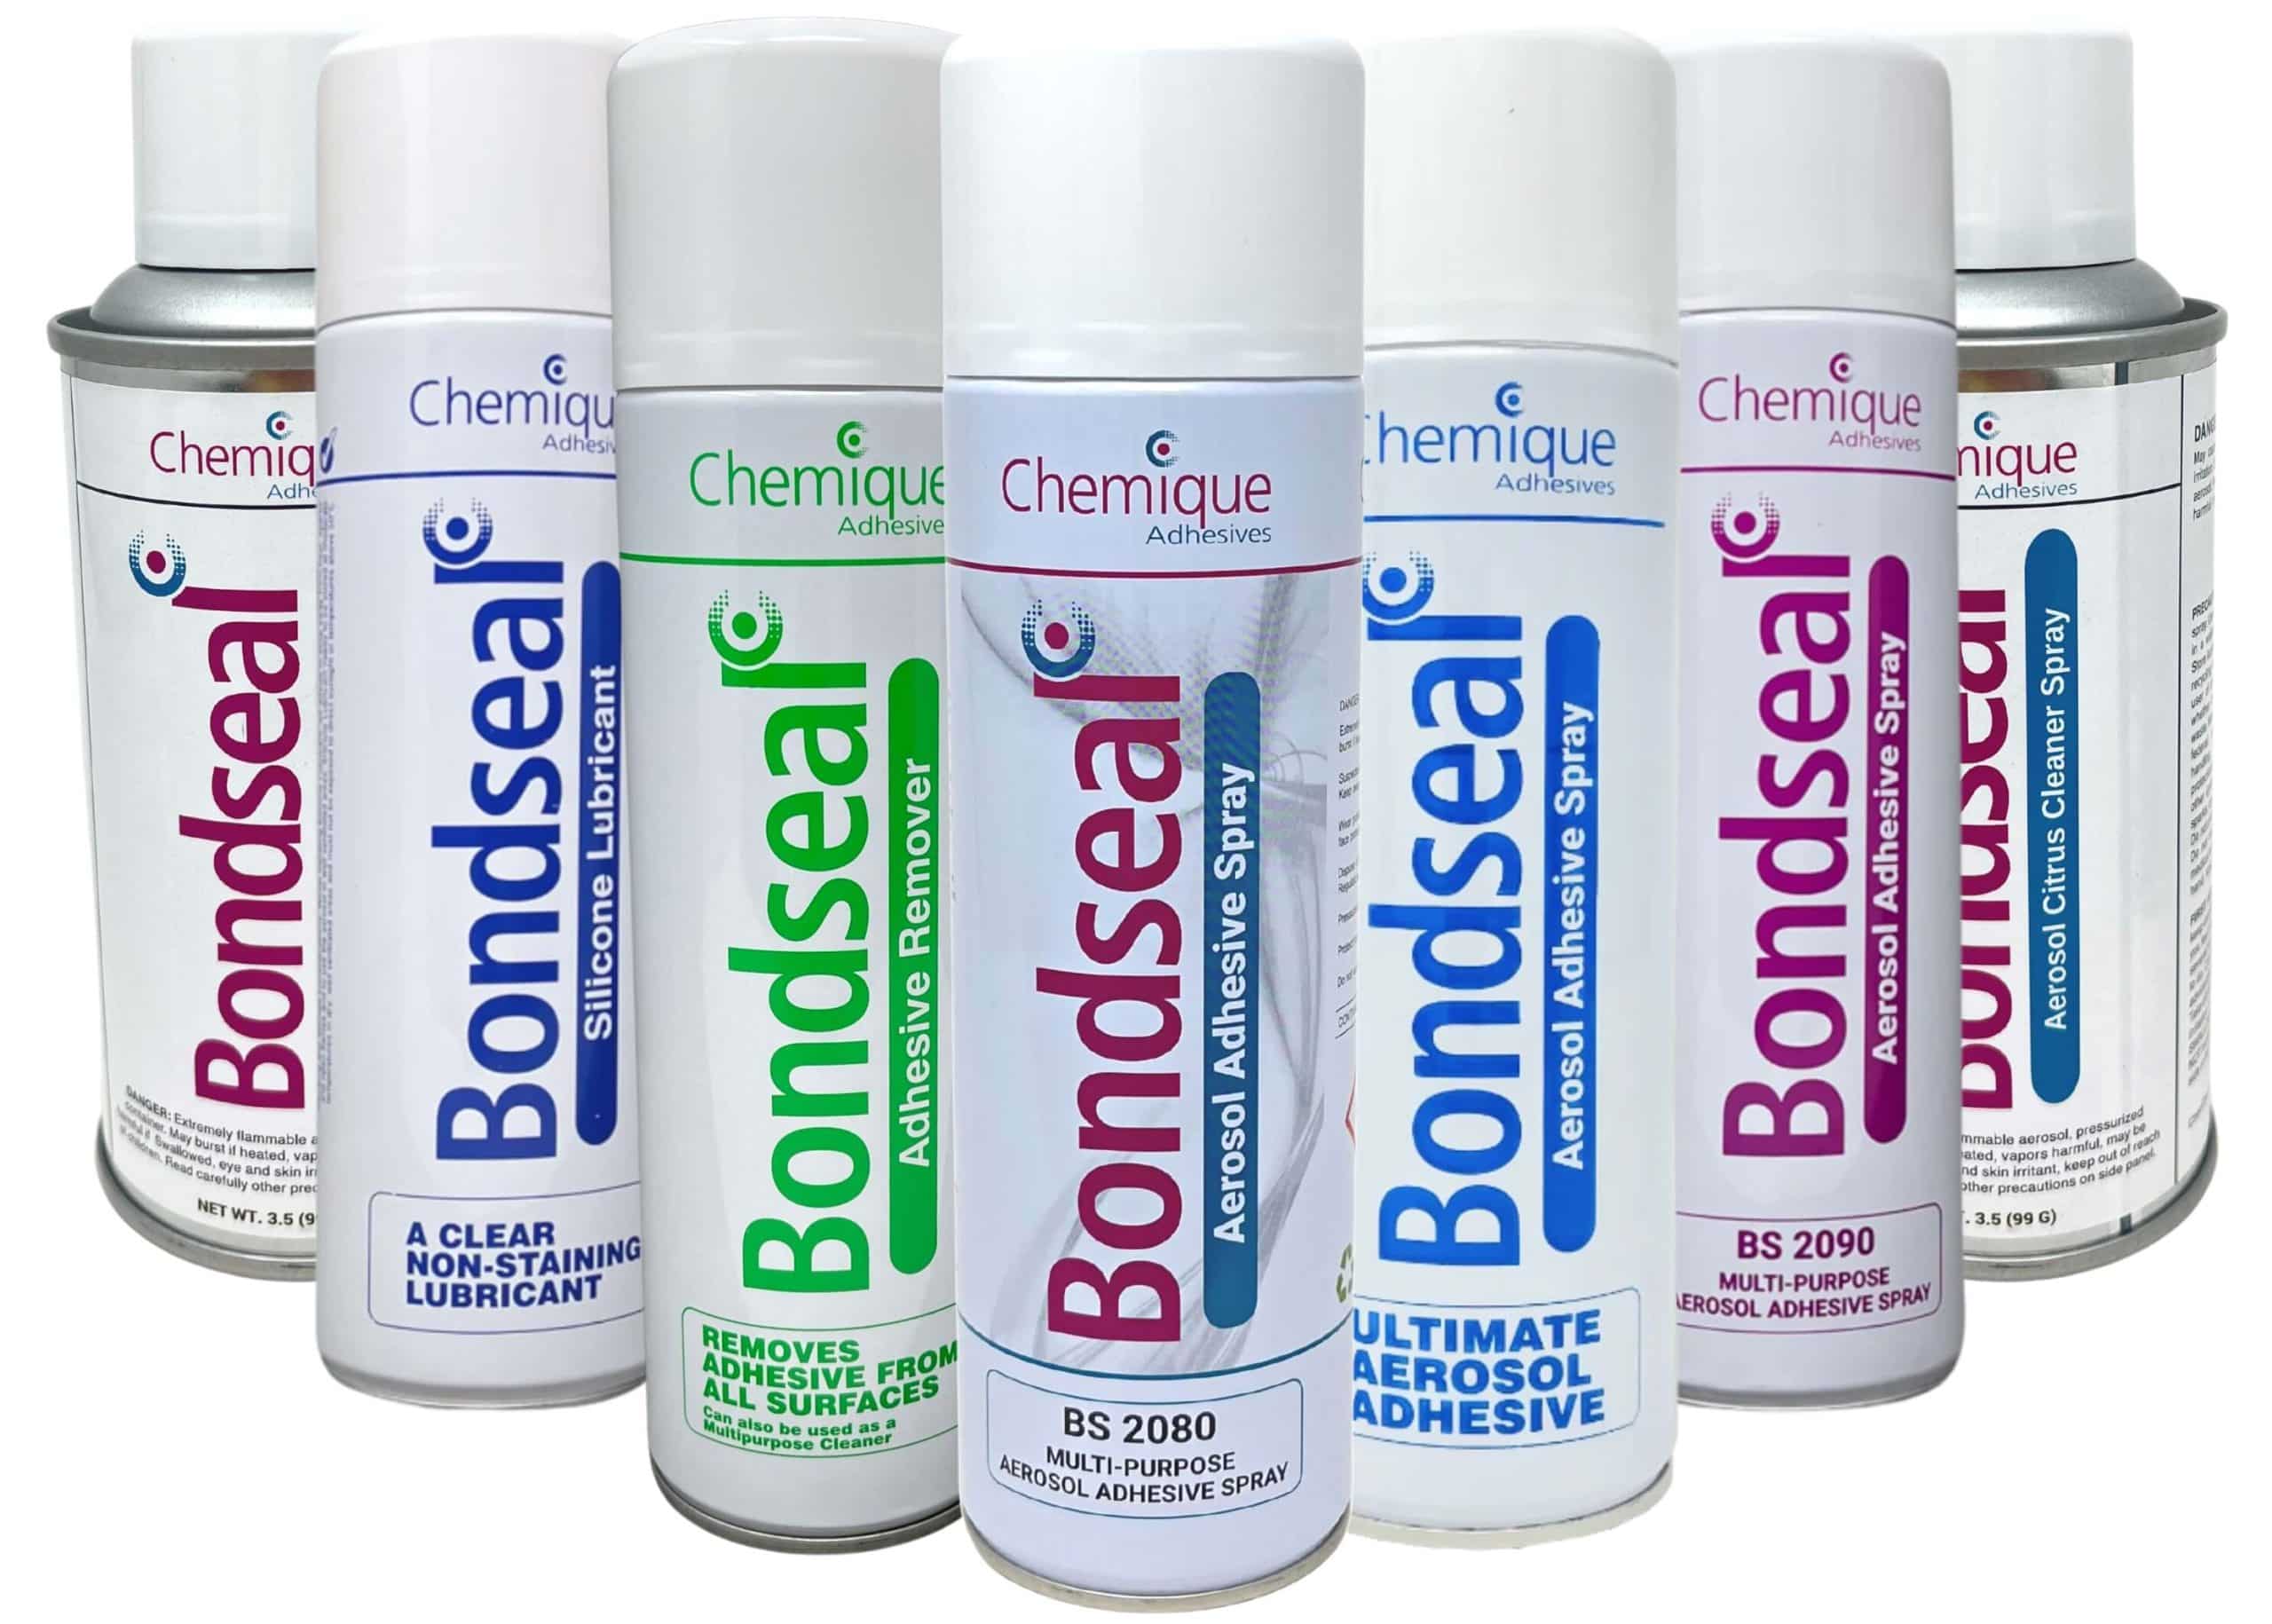 bondseal aerosol adhesives lined up